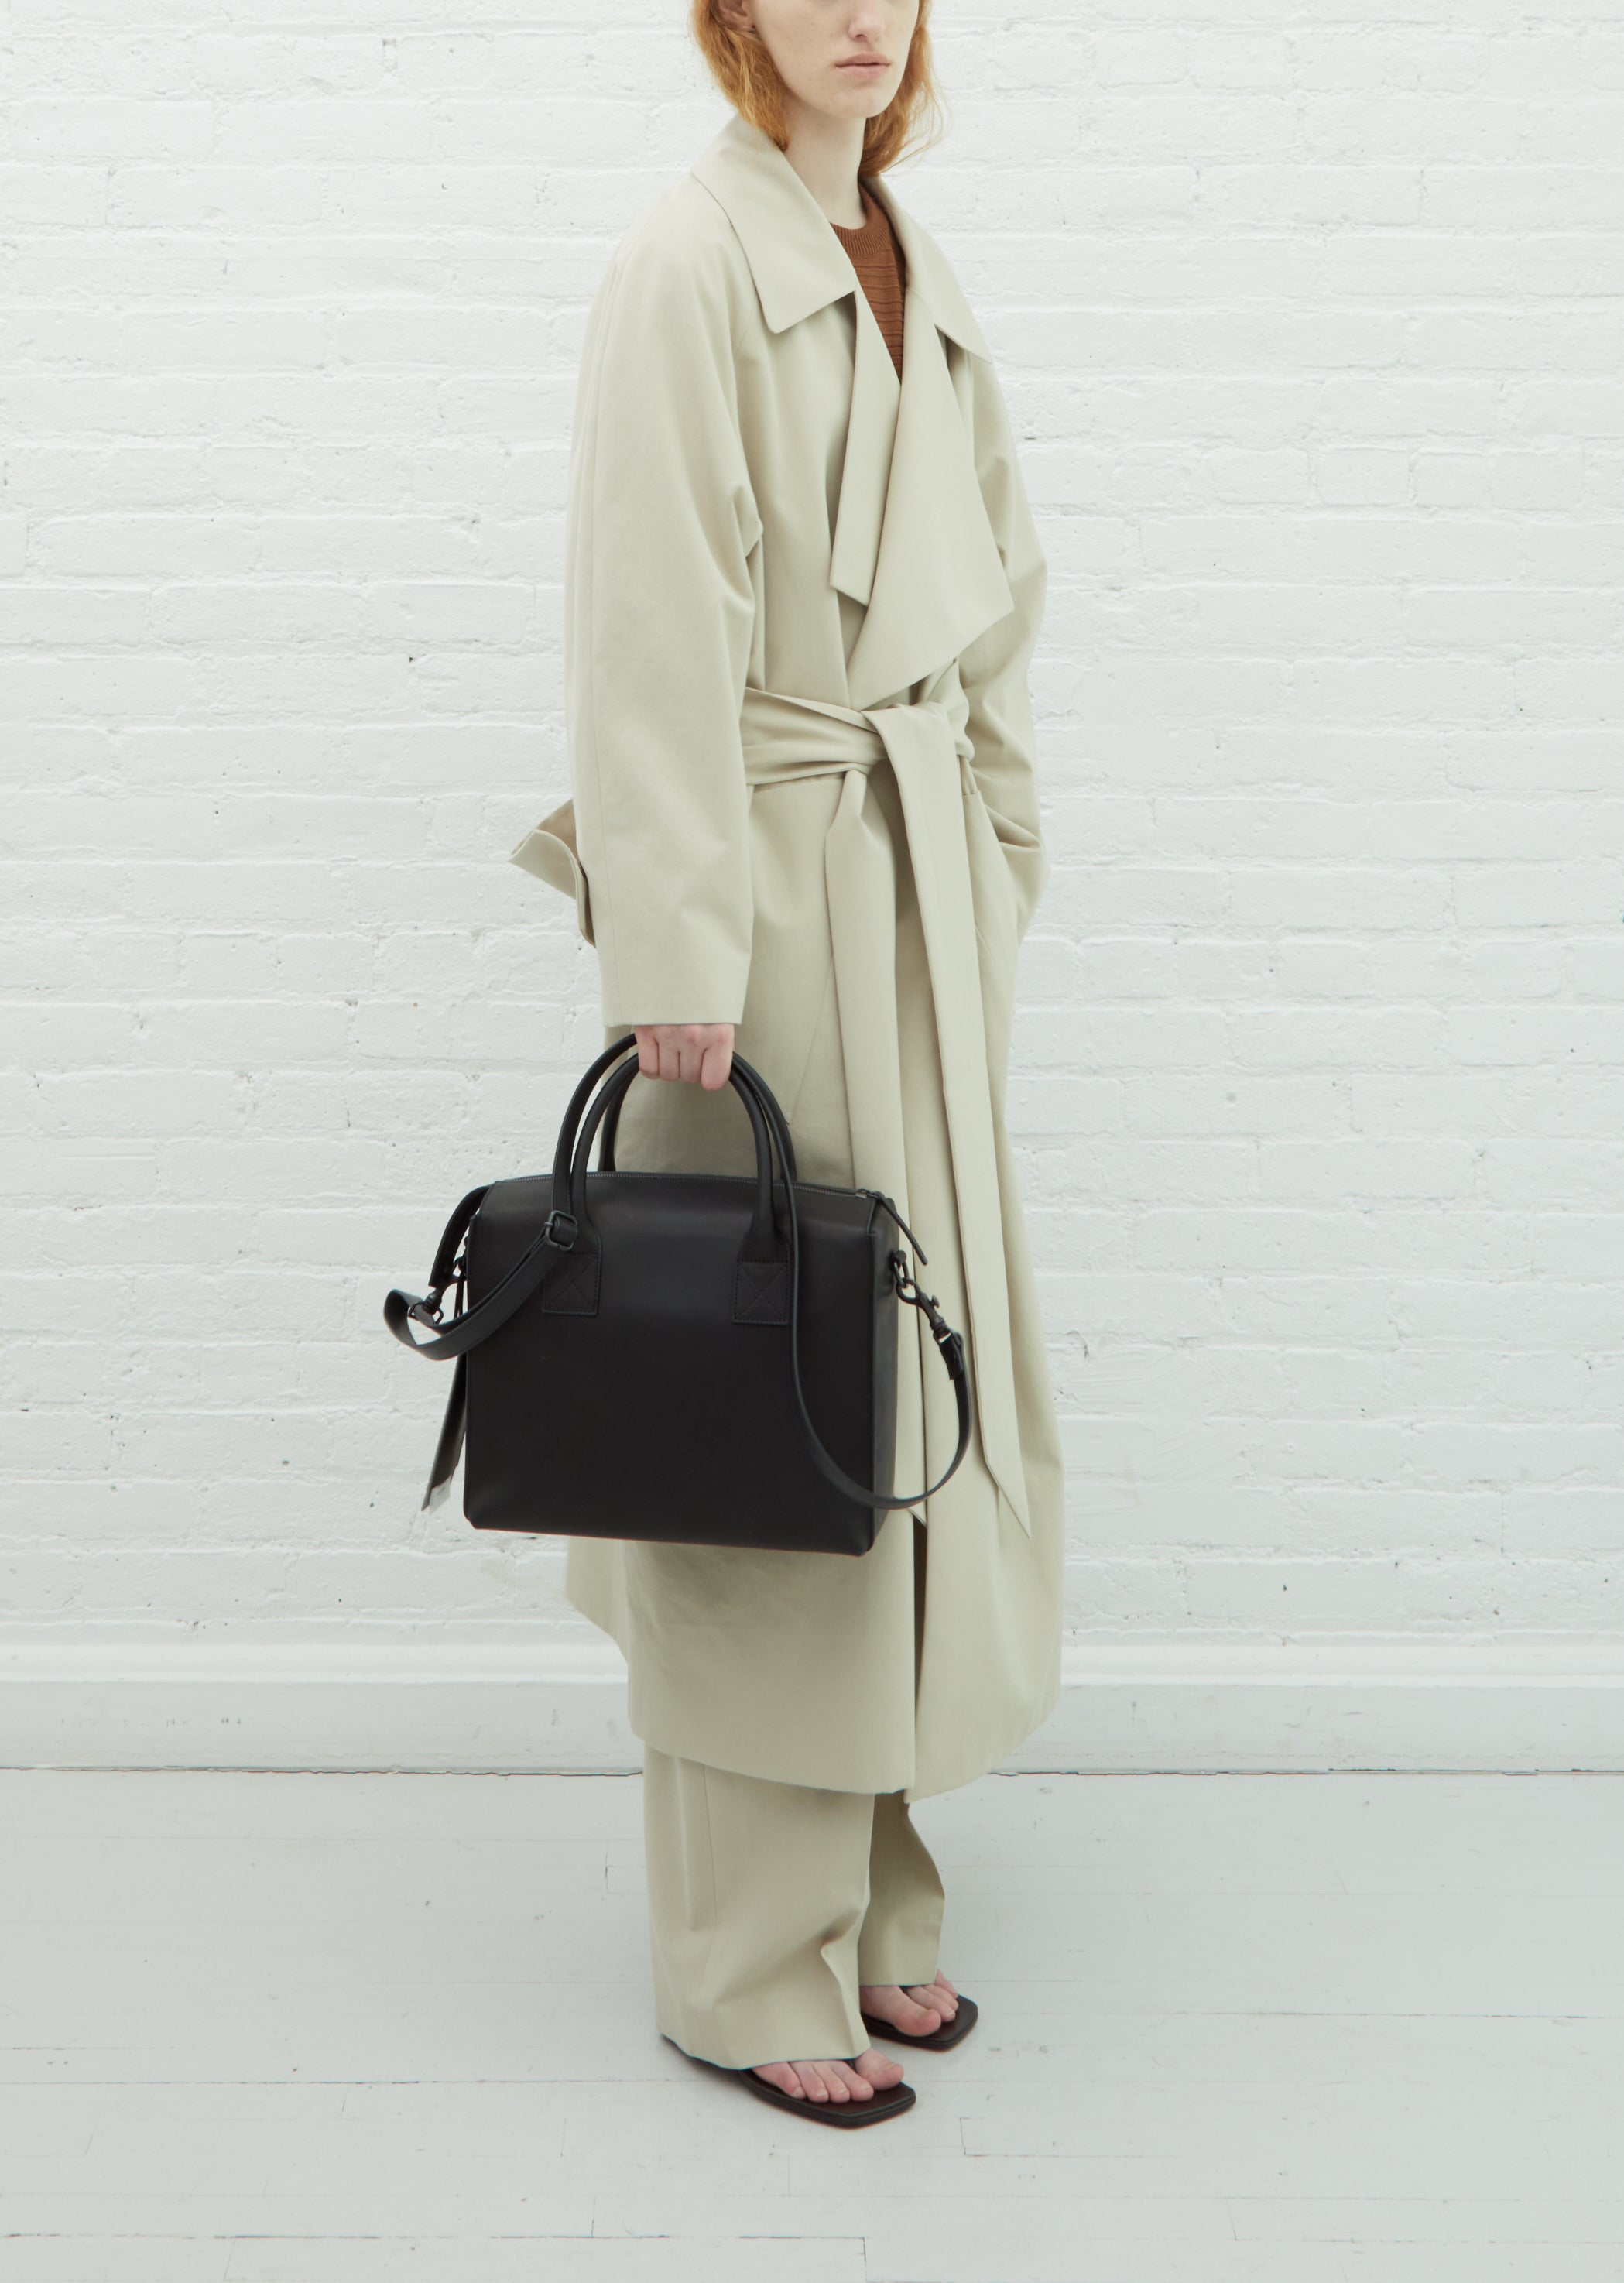 Merkaren Women's Small Satchel Bag Classic Top Handle Purses Fashion  Crossbody Handbags with Shoulder Strap